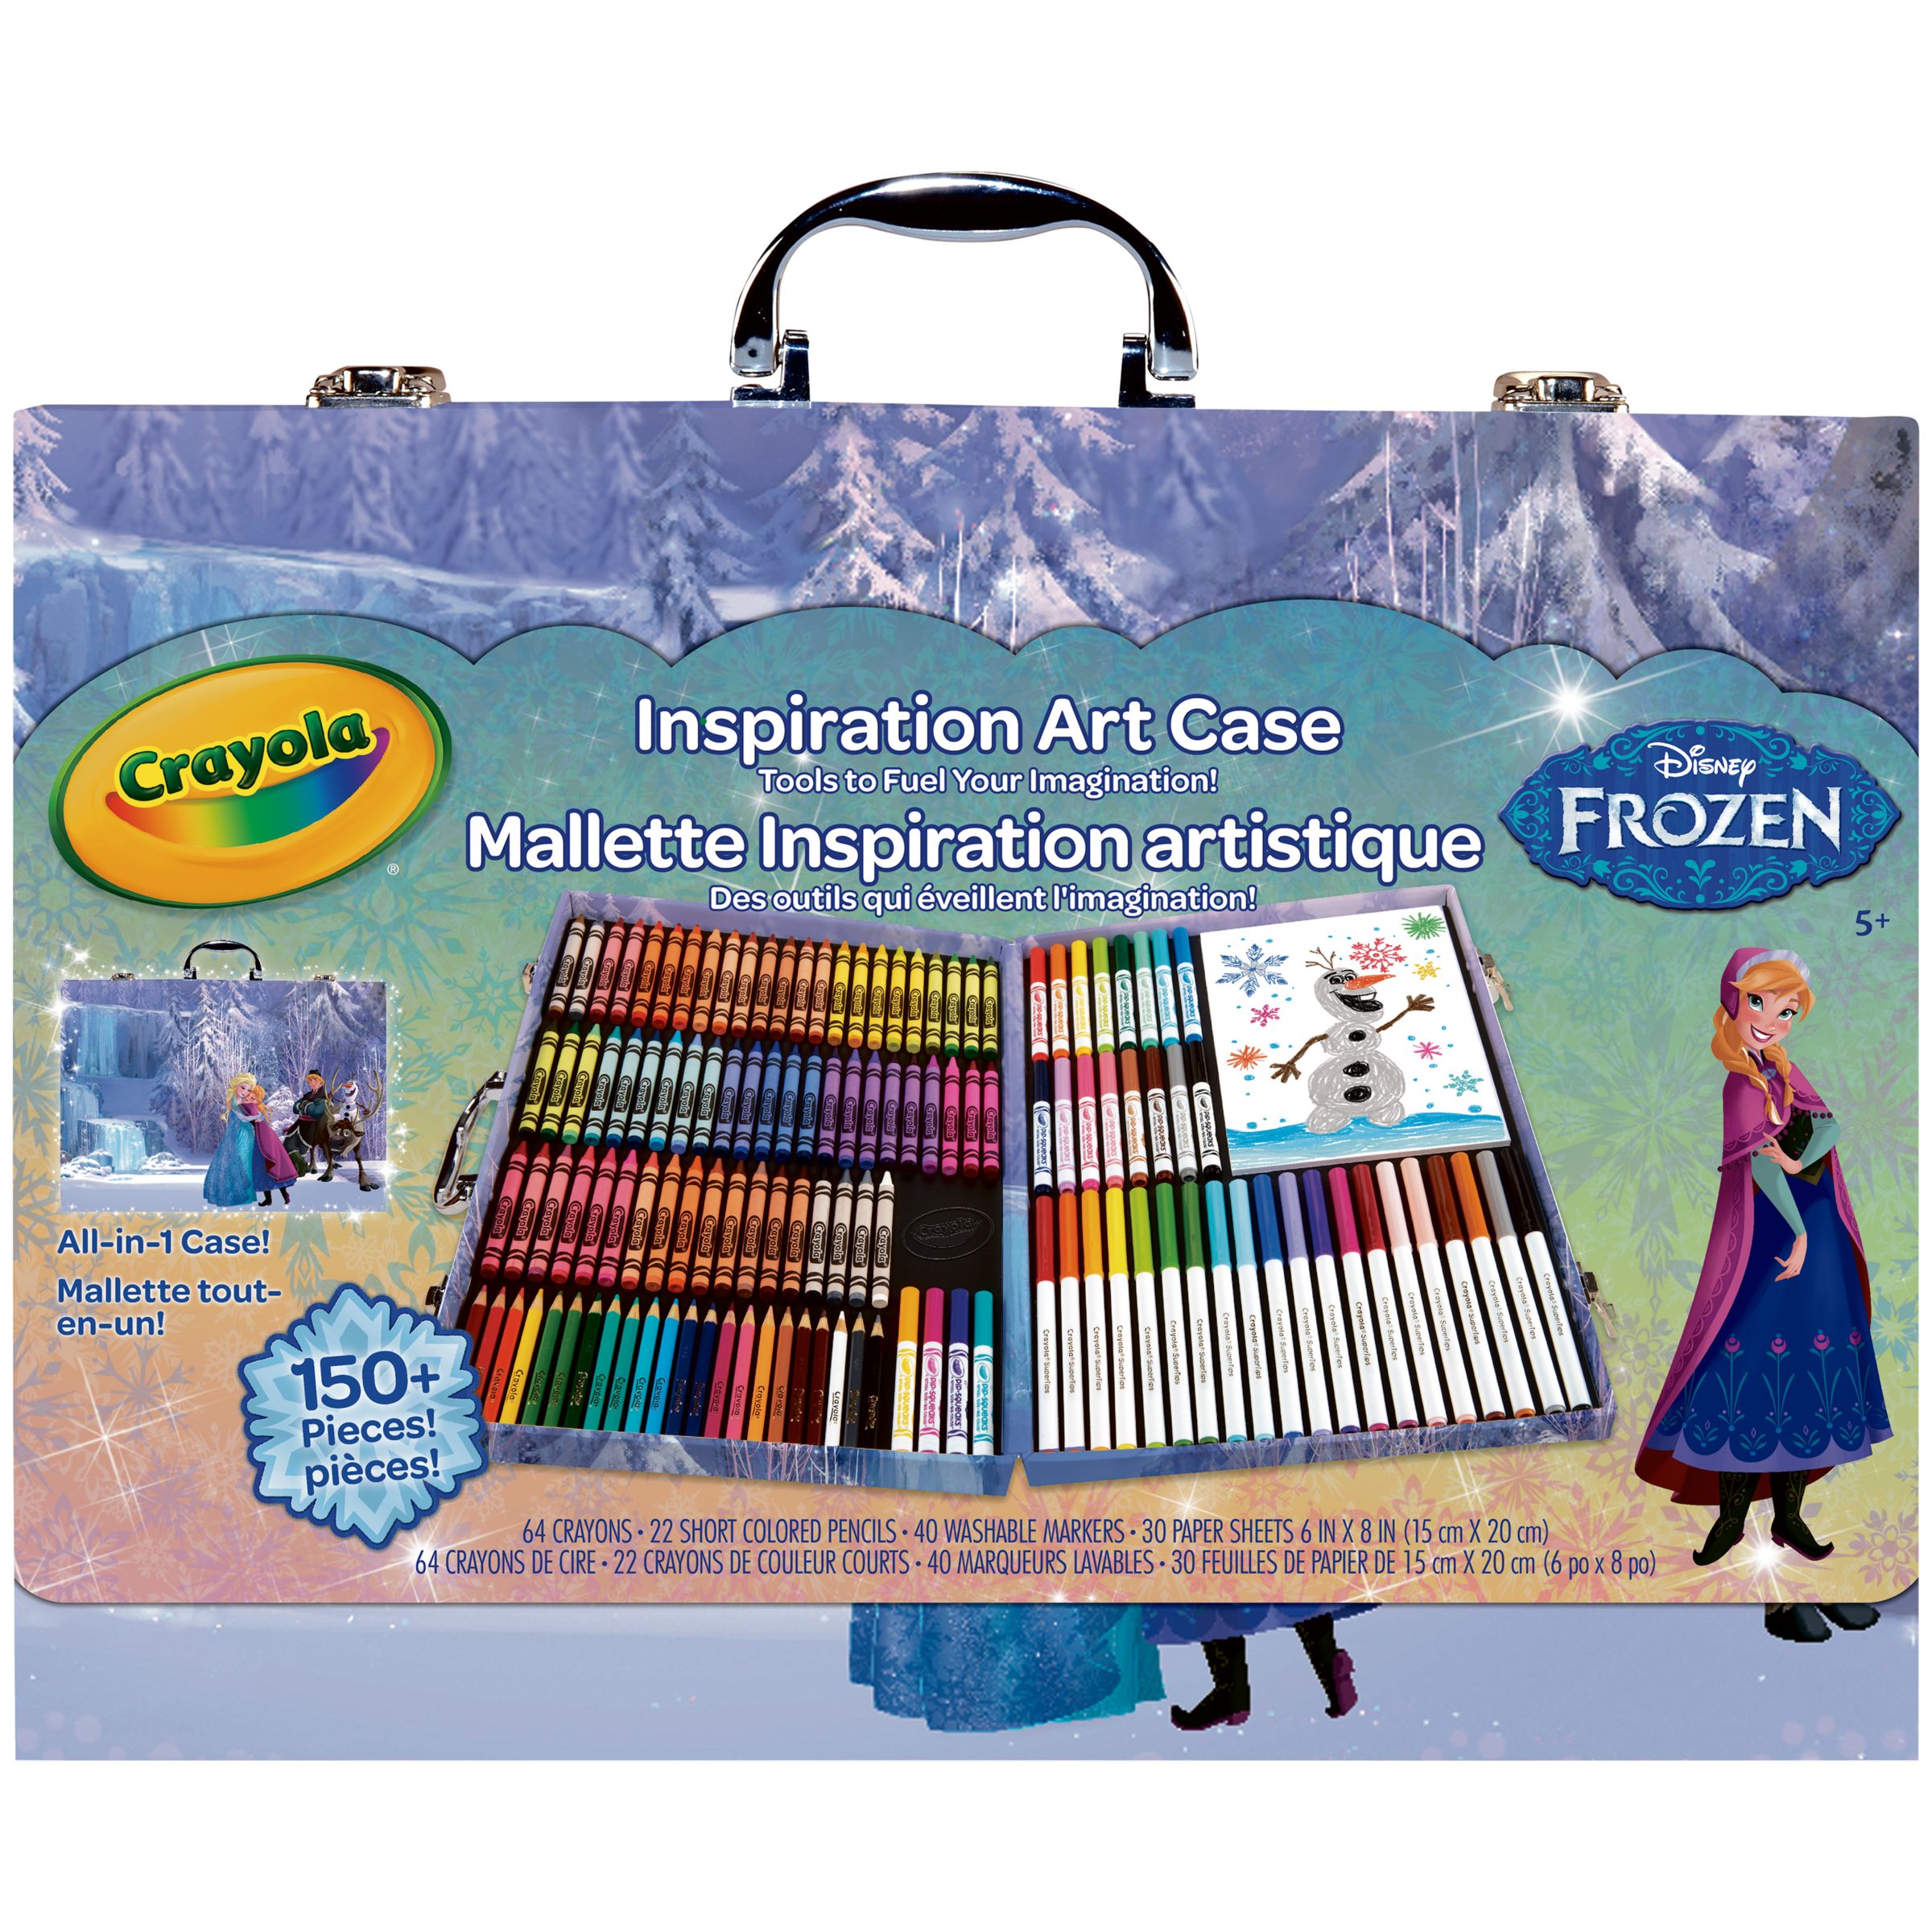 CASE STUDY 4: Crayola Art Case Frozen 2 Inspiration Set - Starprint Vietnam